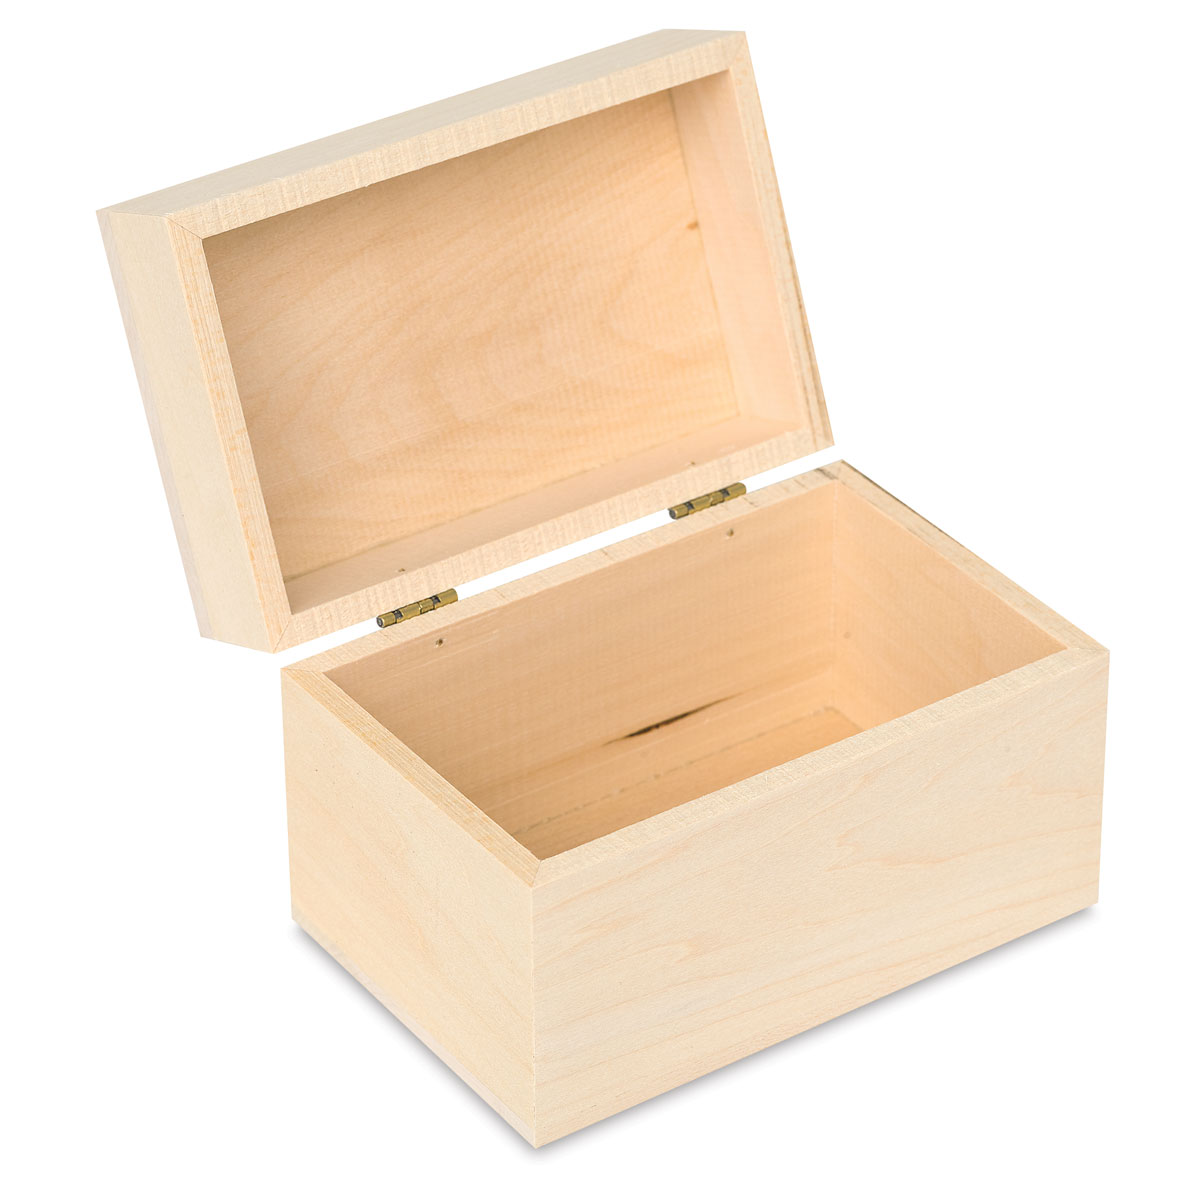 small balsa wood boxes